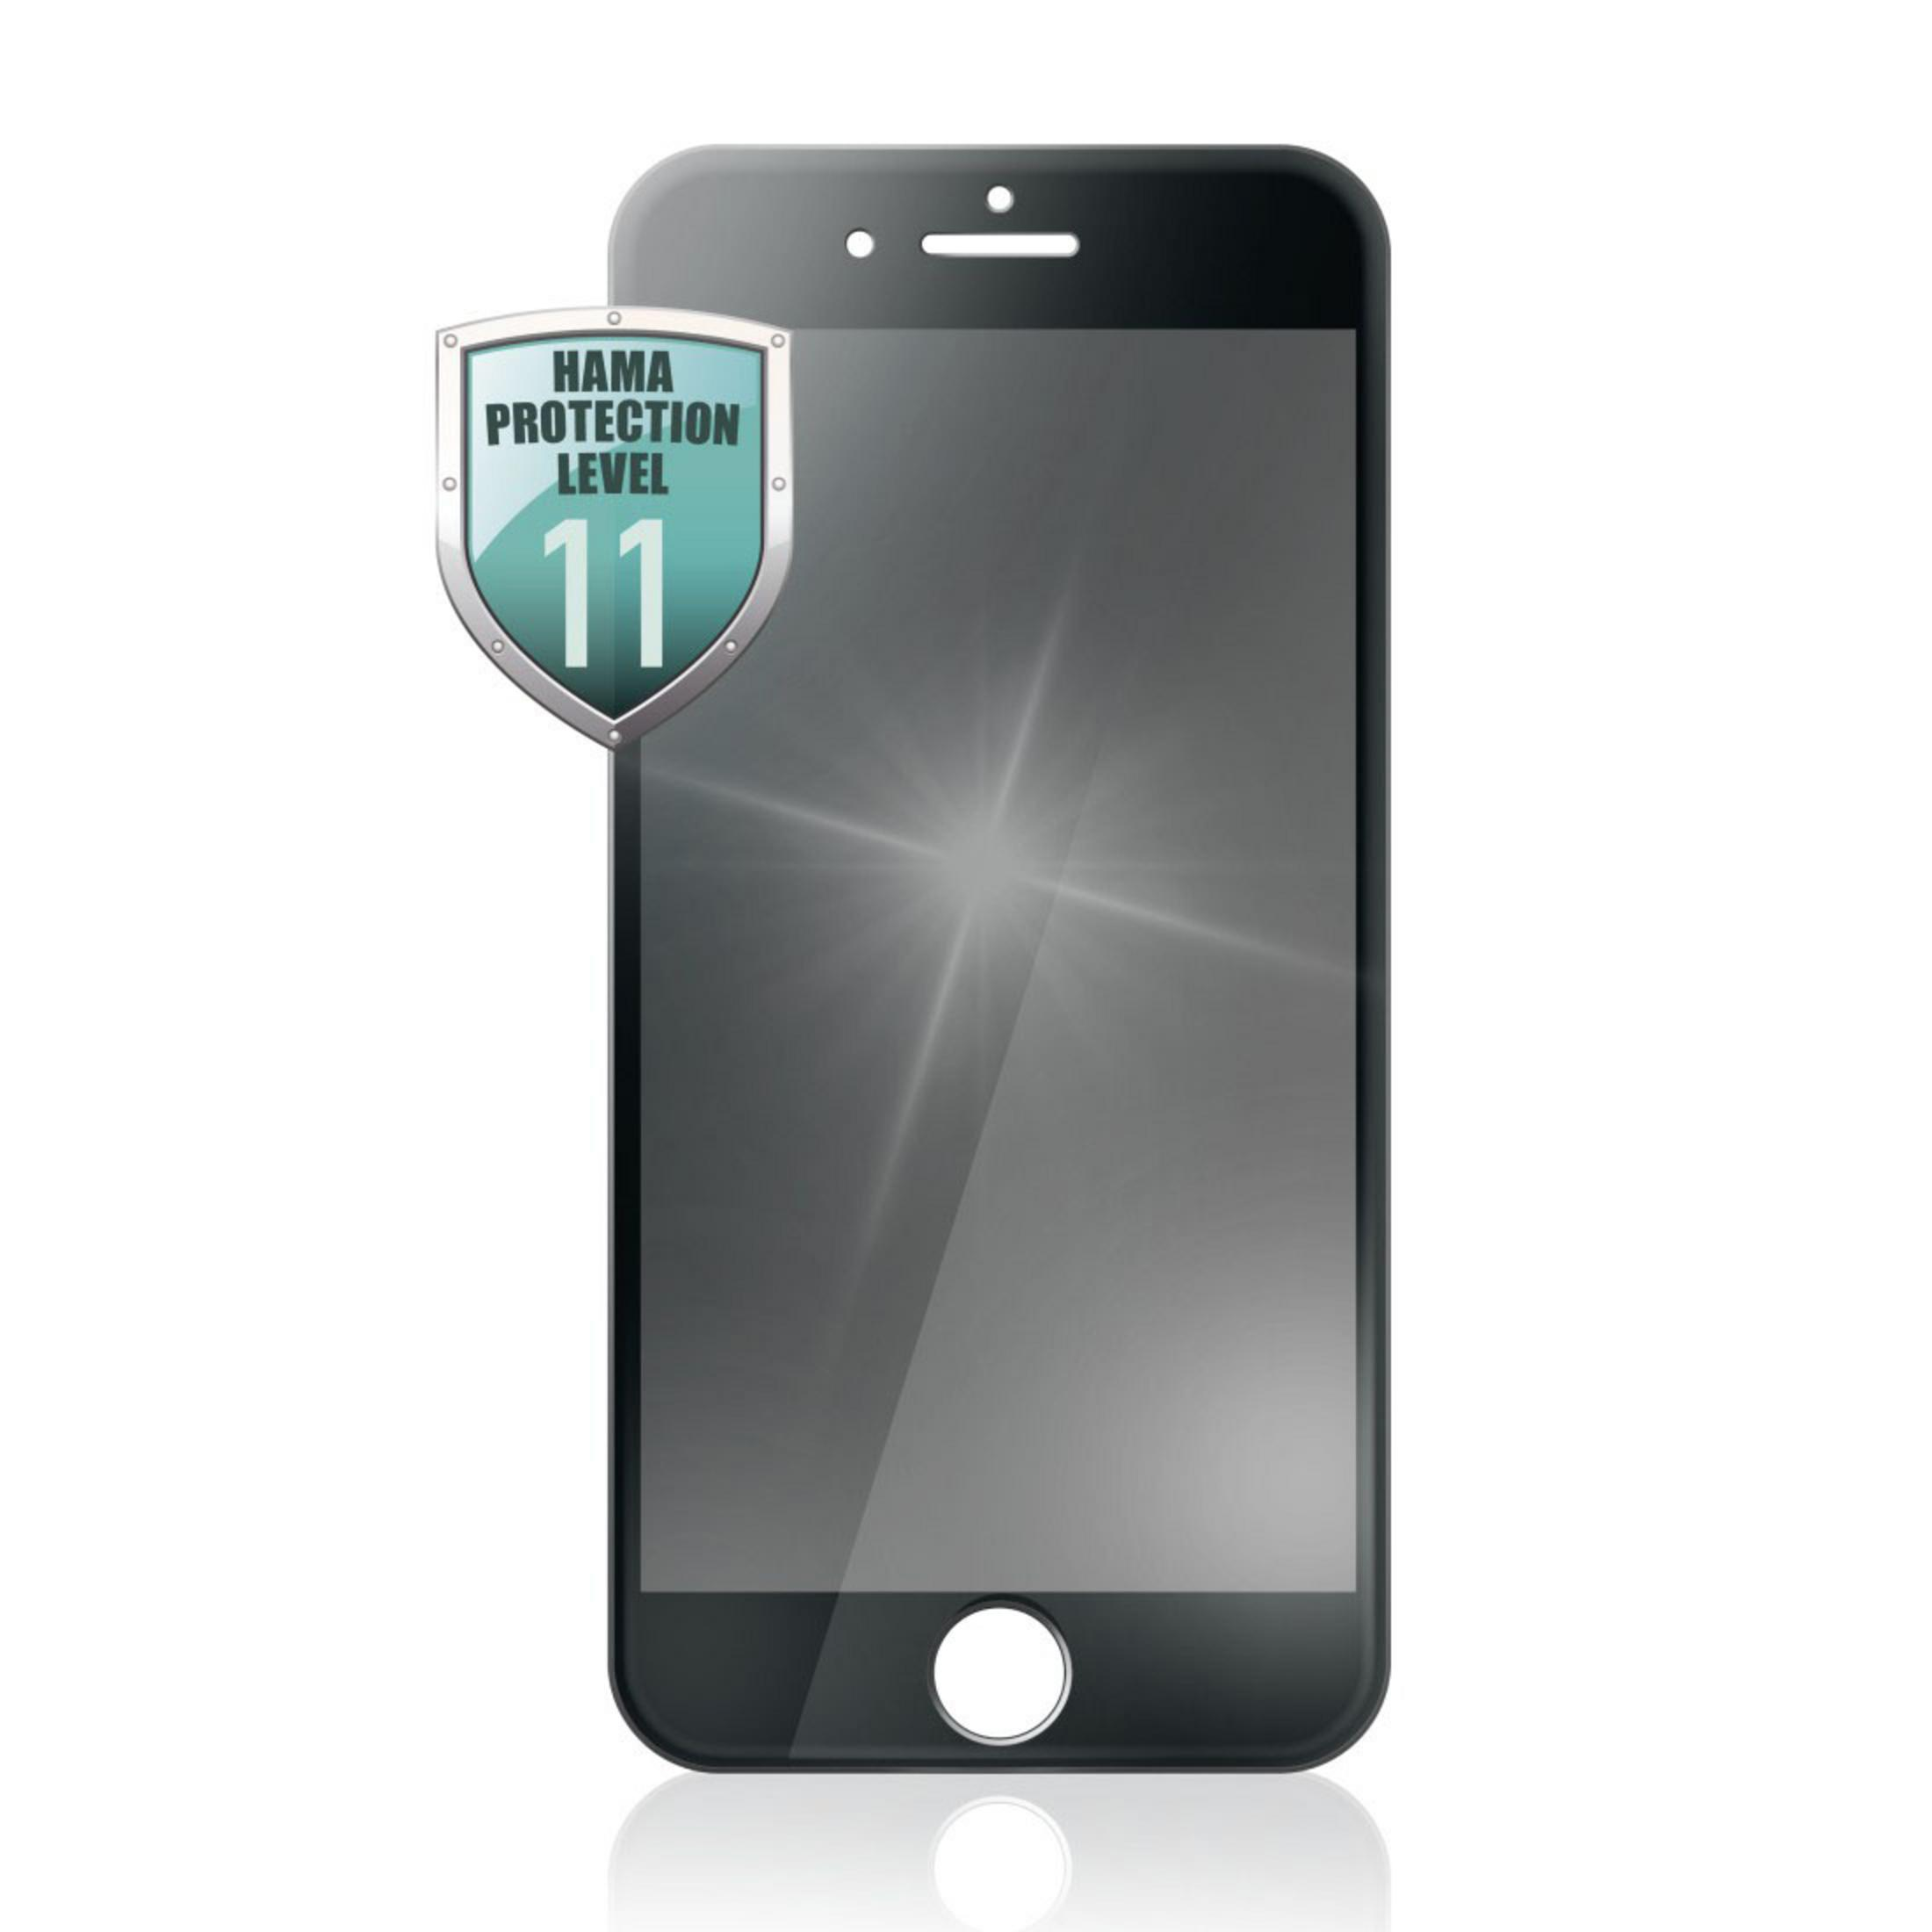 HAMA 186293 GL. IPH SCR. (2020)) iPhone iPhone 6 6, 8, iPhone PRIVACY SE Displayschutz(für 7, 6s, Apple iPhone iPhone PROT